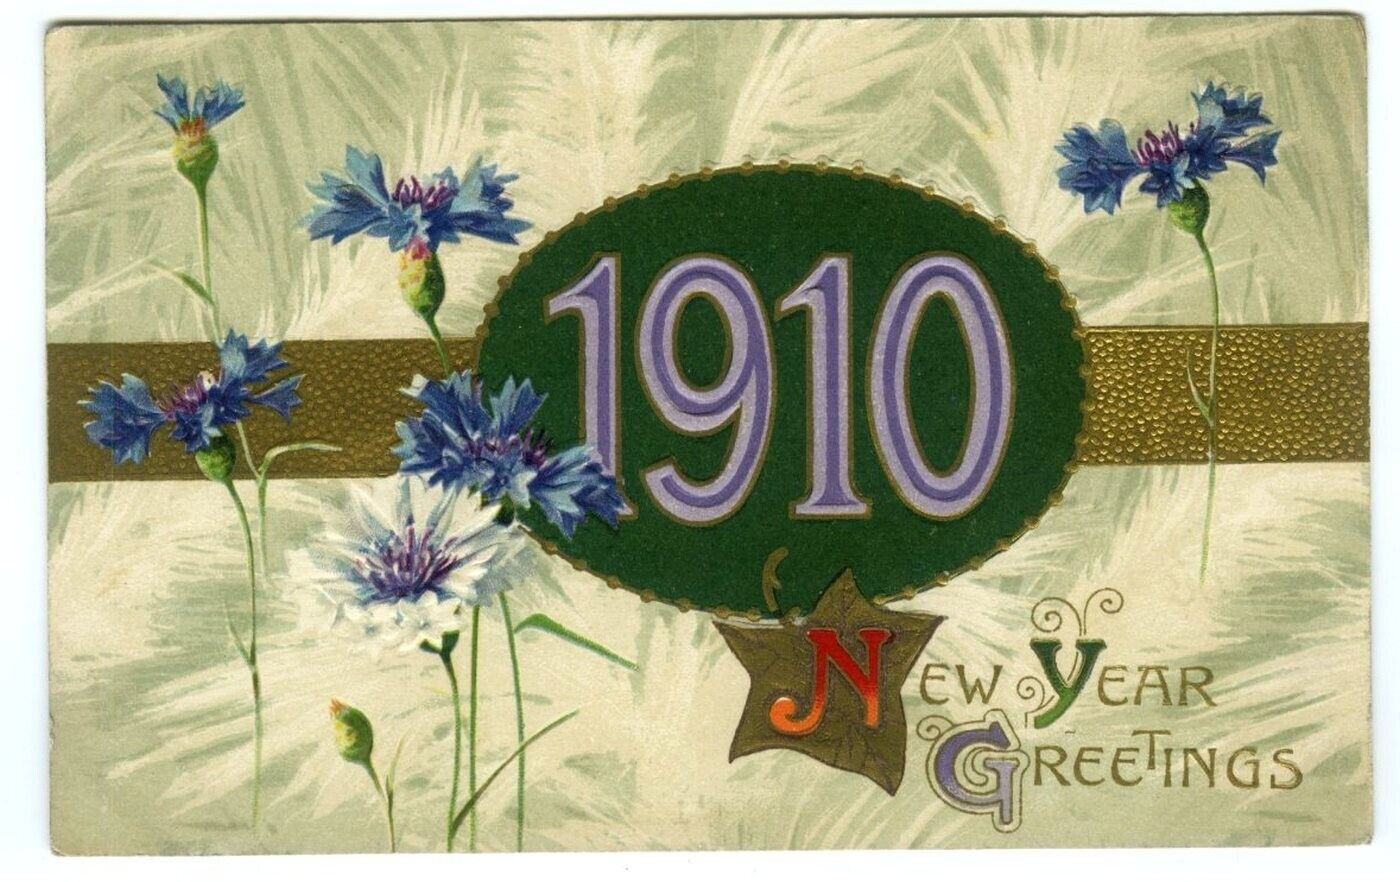 John Winsch 1910 New Year Greetings Vintage Postcard